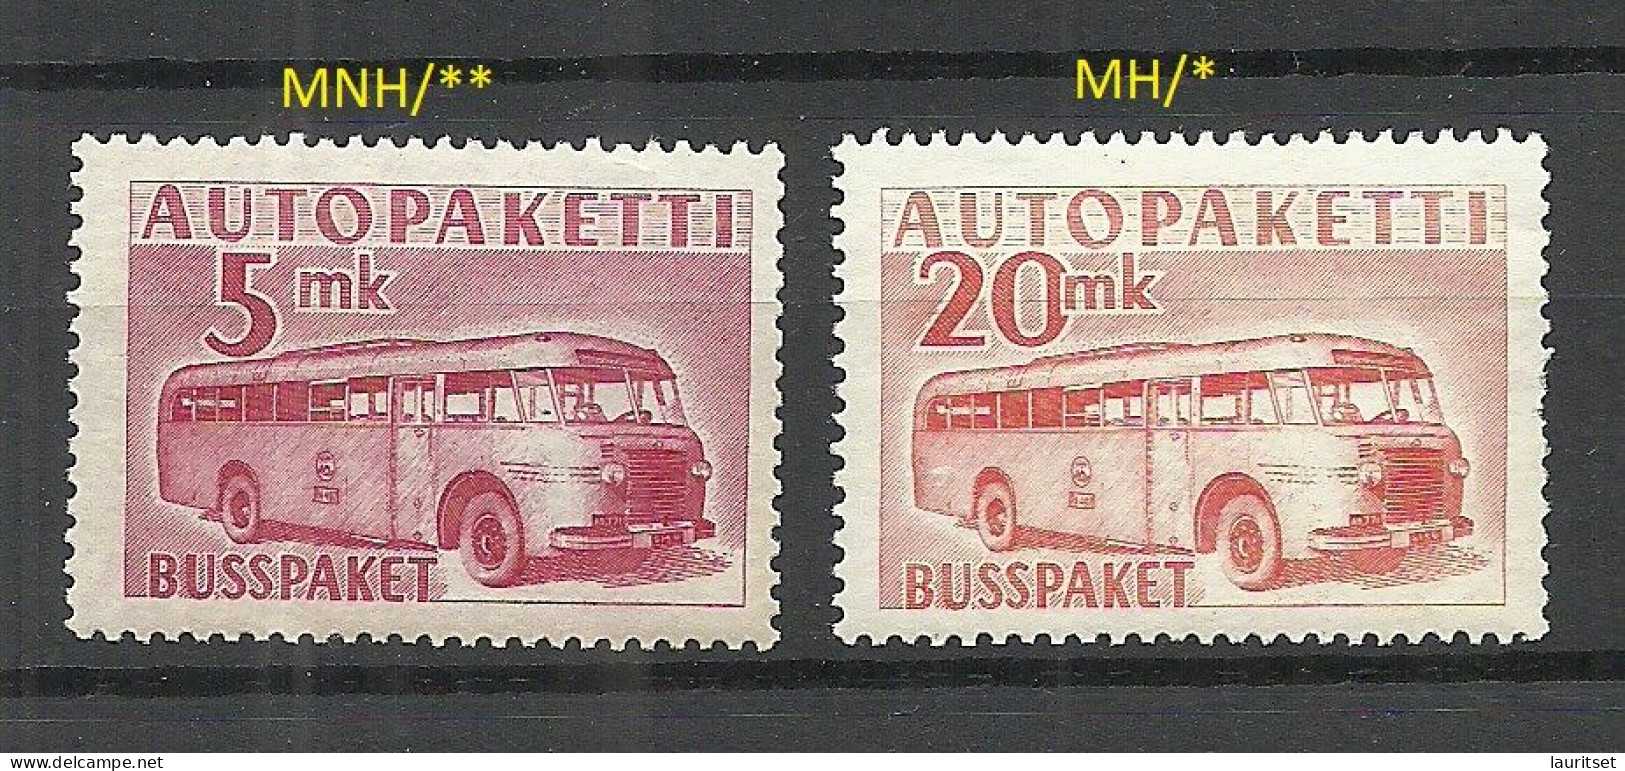 FINLAND FINNLAND 1955/1958 Auto-Paketmarken O Bus Omnibus Packet Stamps Michel 6 - 7 MNH/MH - Parcel Post